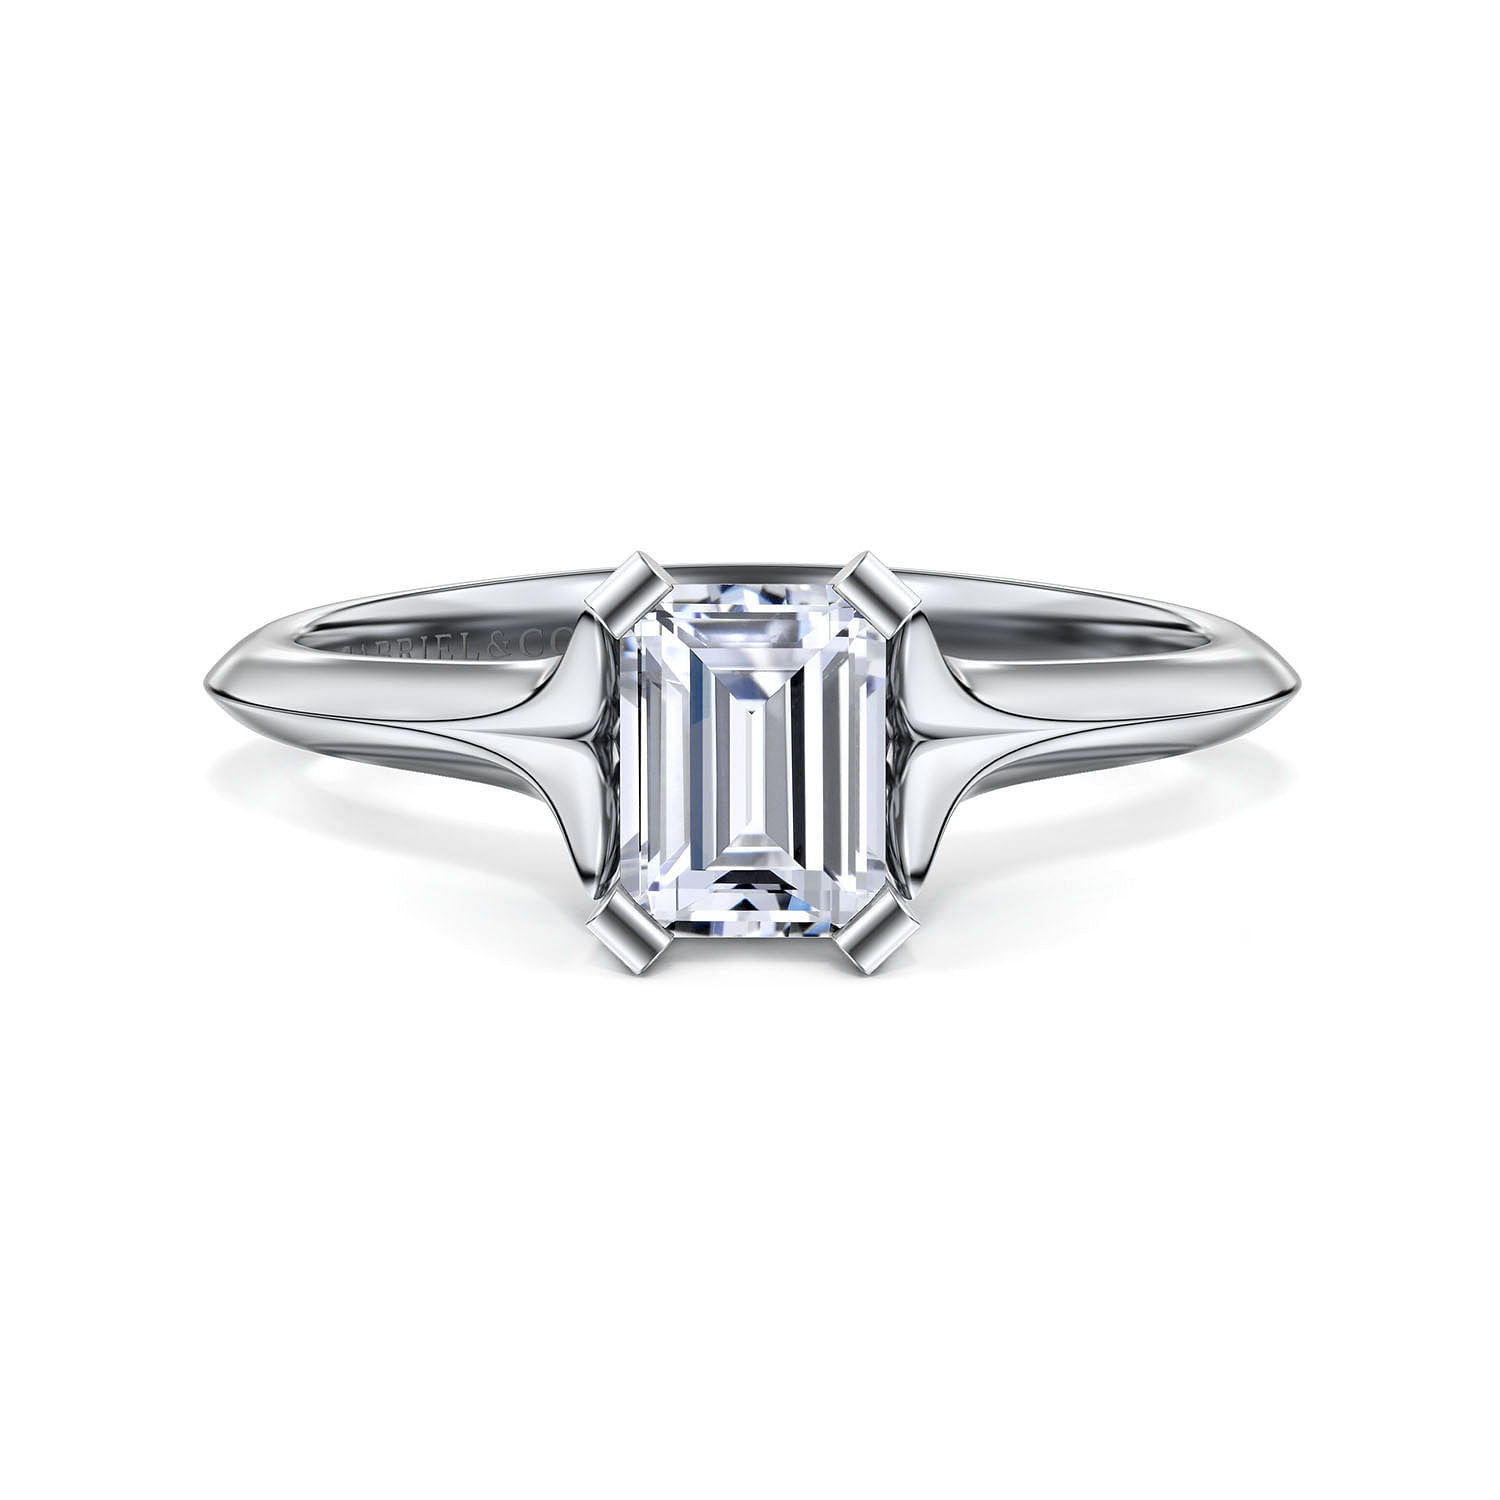 Ellis - 14K White Gold Emerald Cut Diamond Engagement Ring